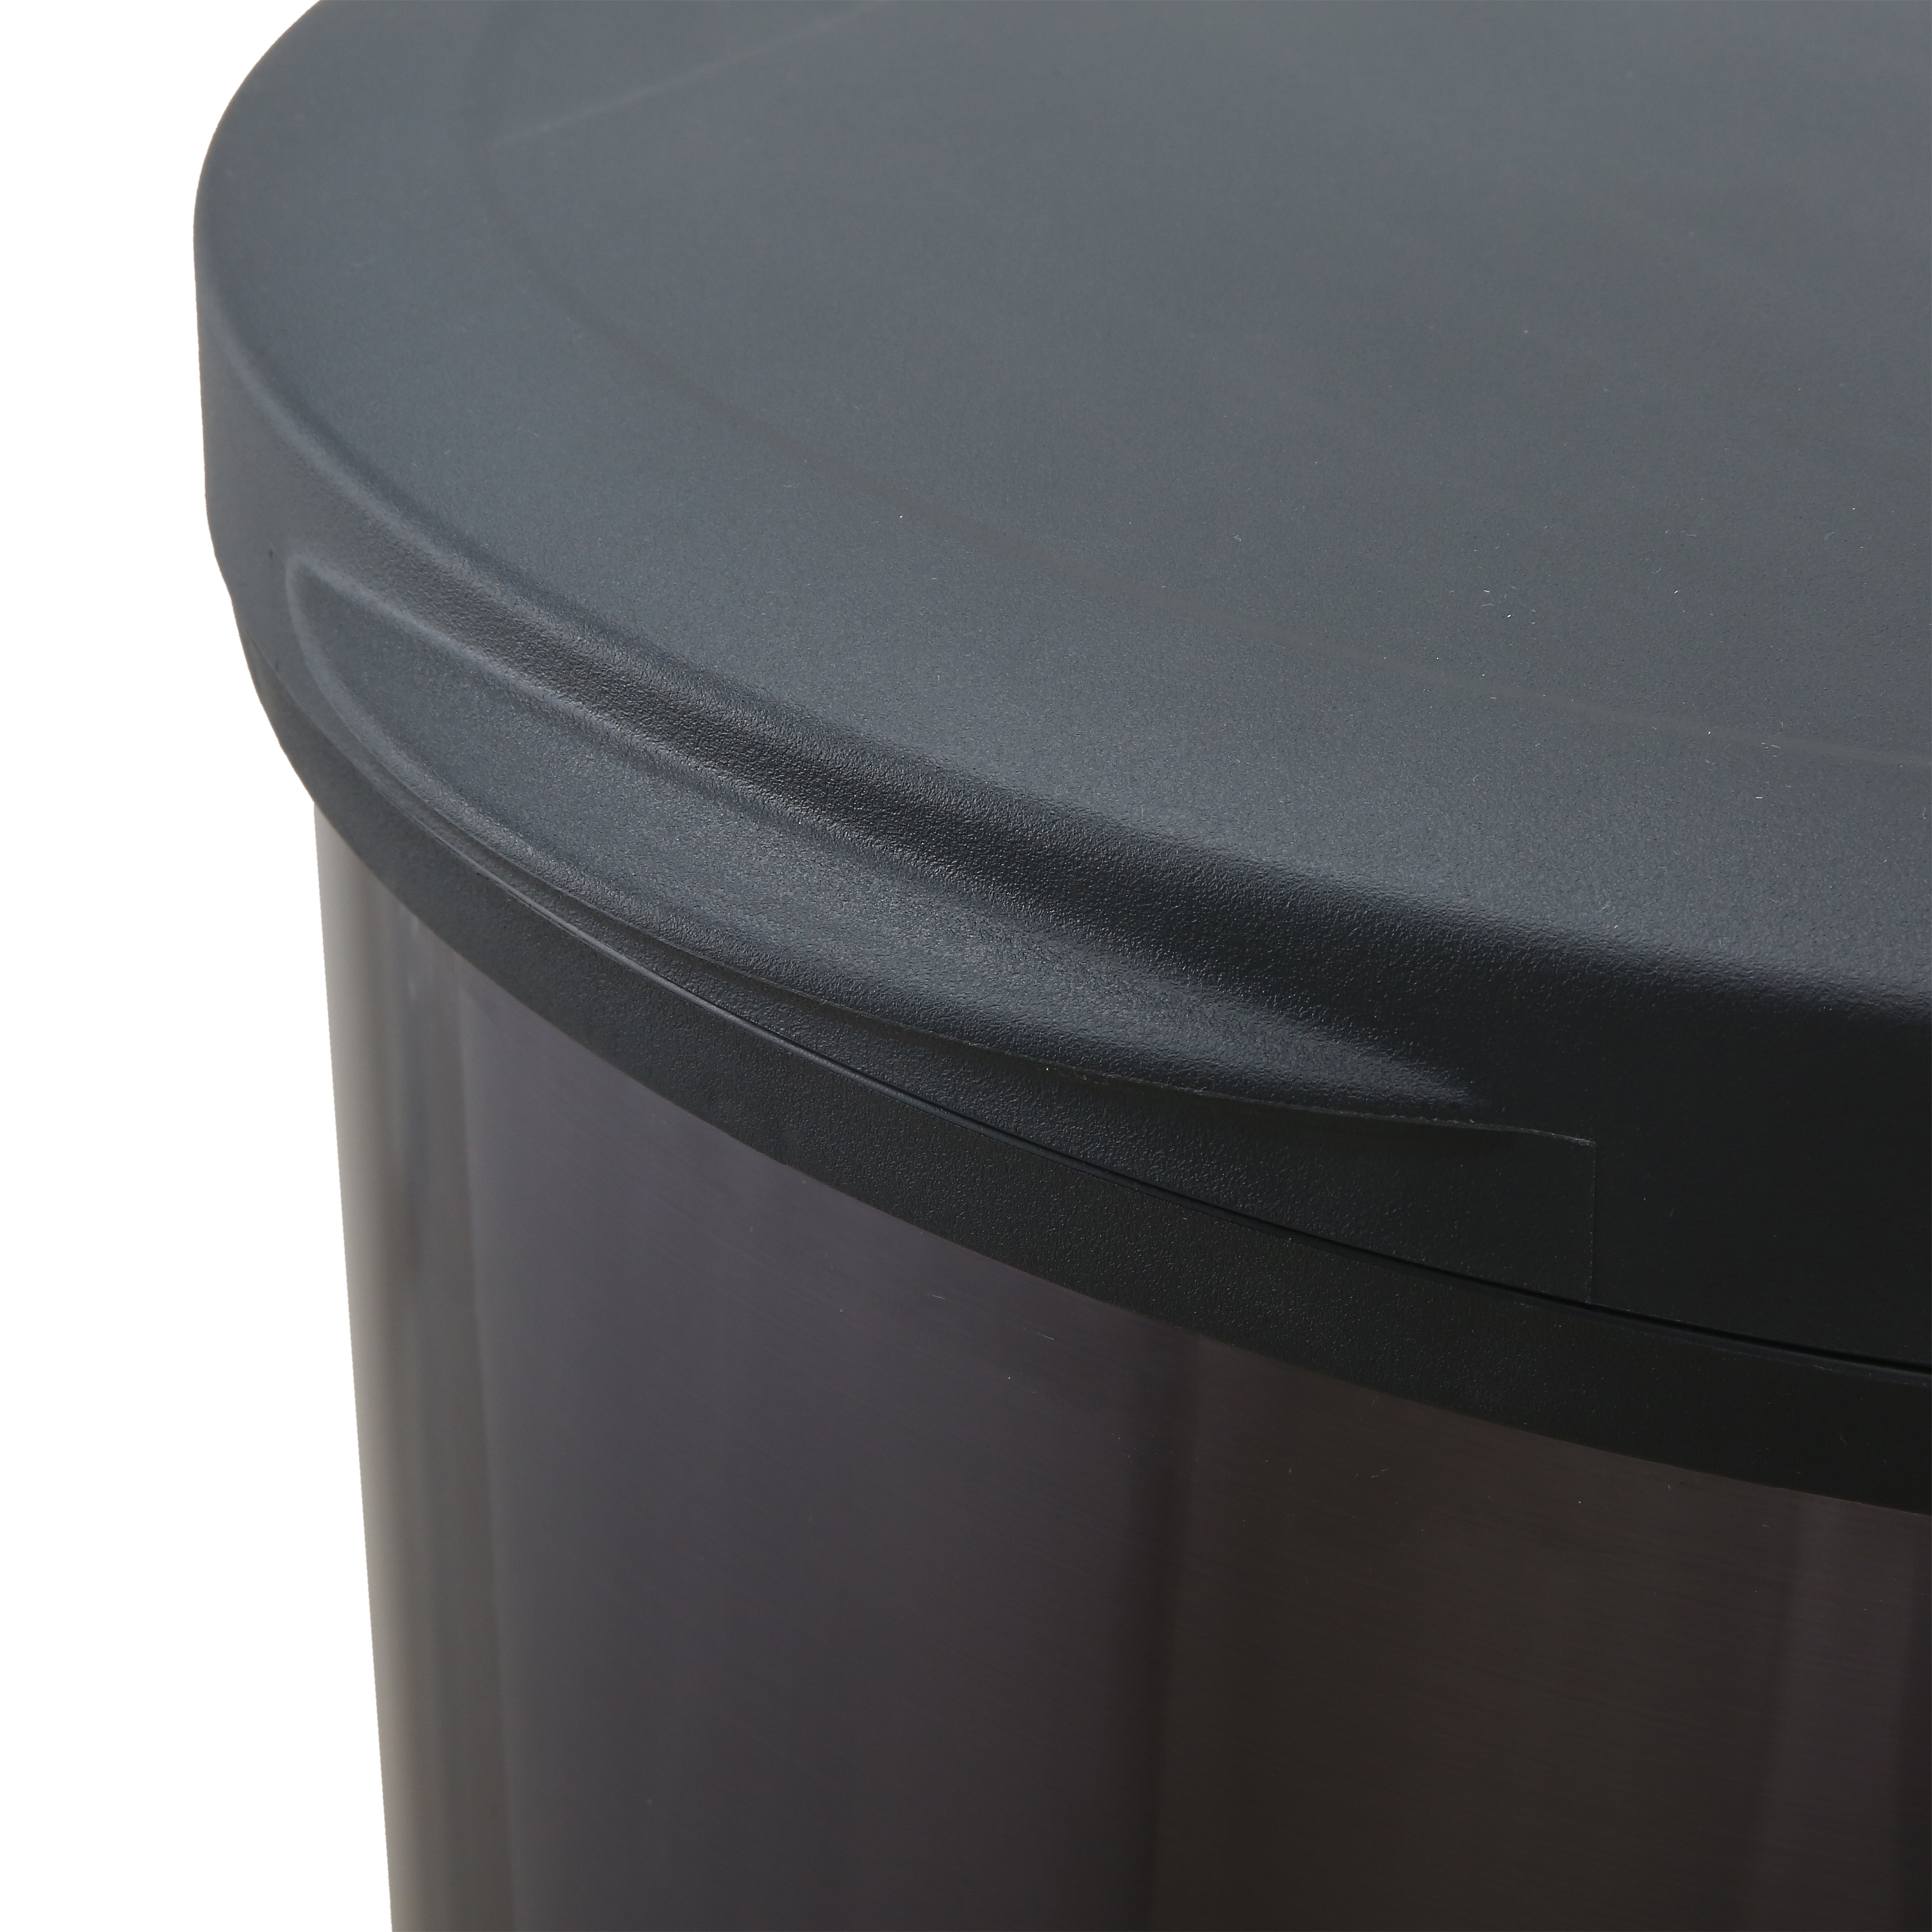 Mainstays 14.2 gal/54 Liter Black Stainless Steel Semi-Round Kitchen Garbage Can - image 3 of 5